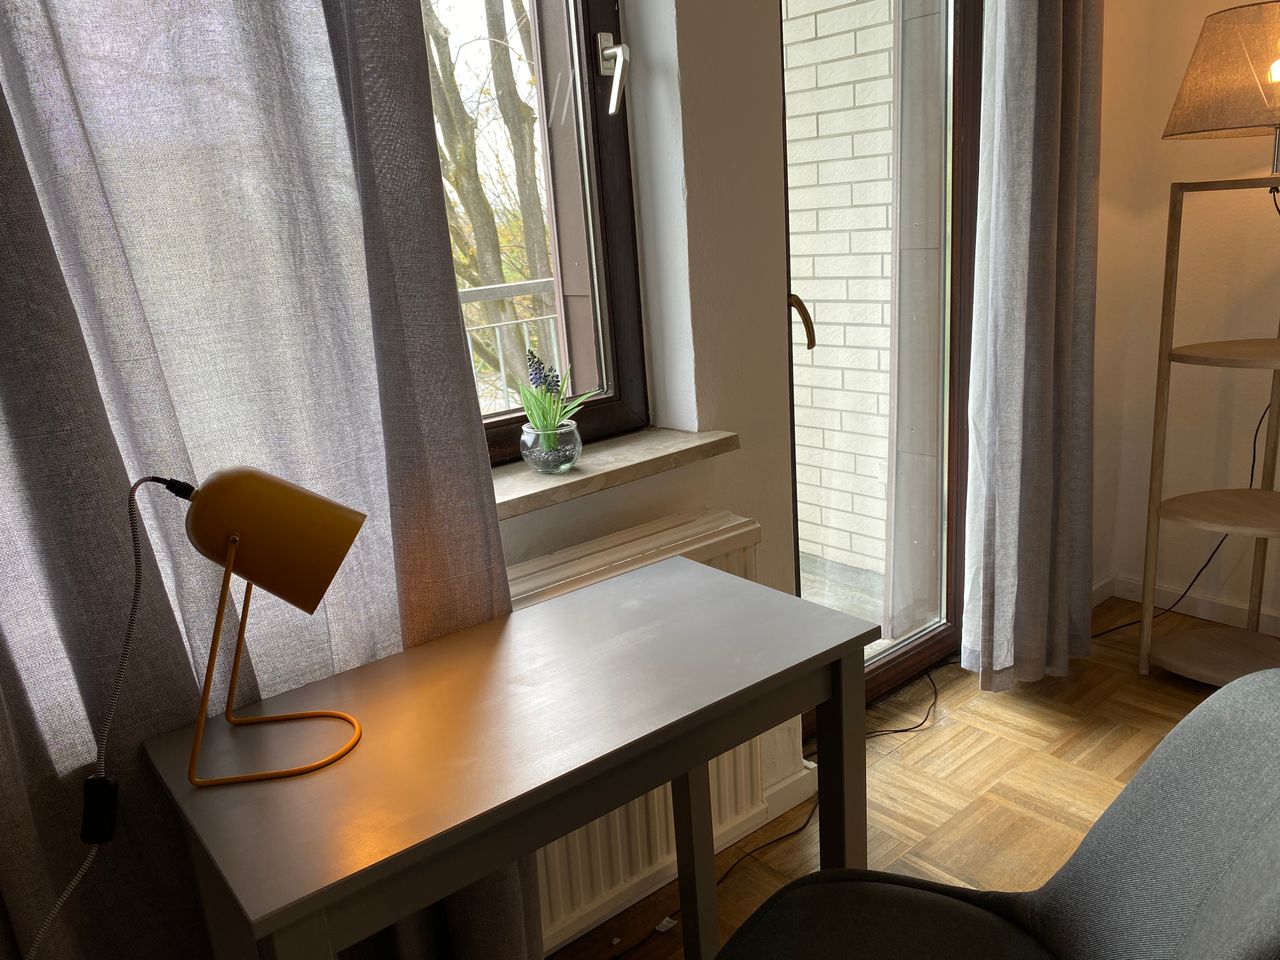 Modern, wonderful apartment (Duisburg)